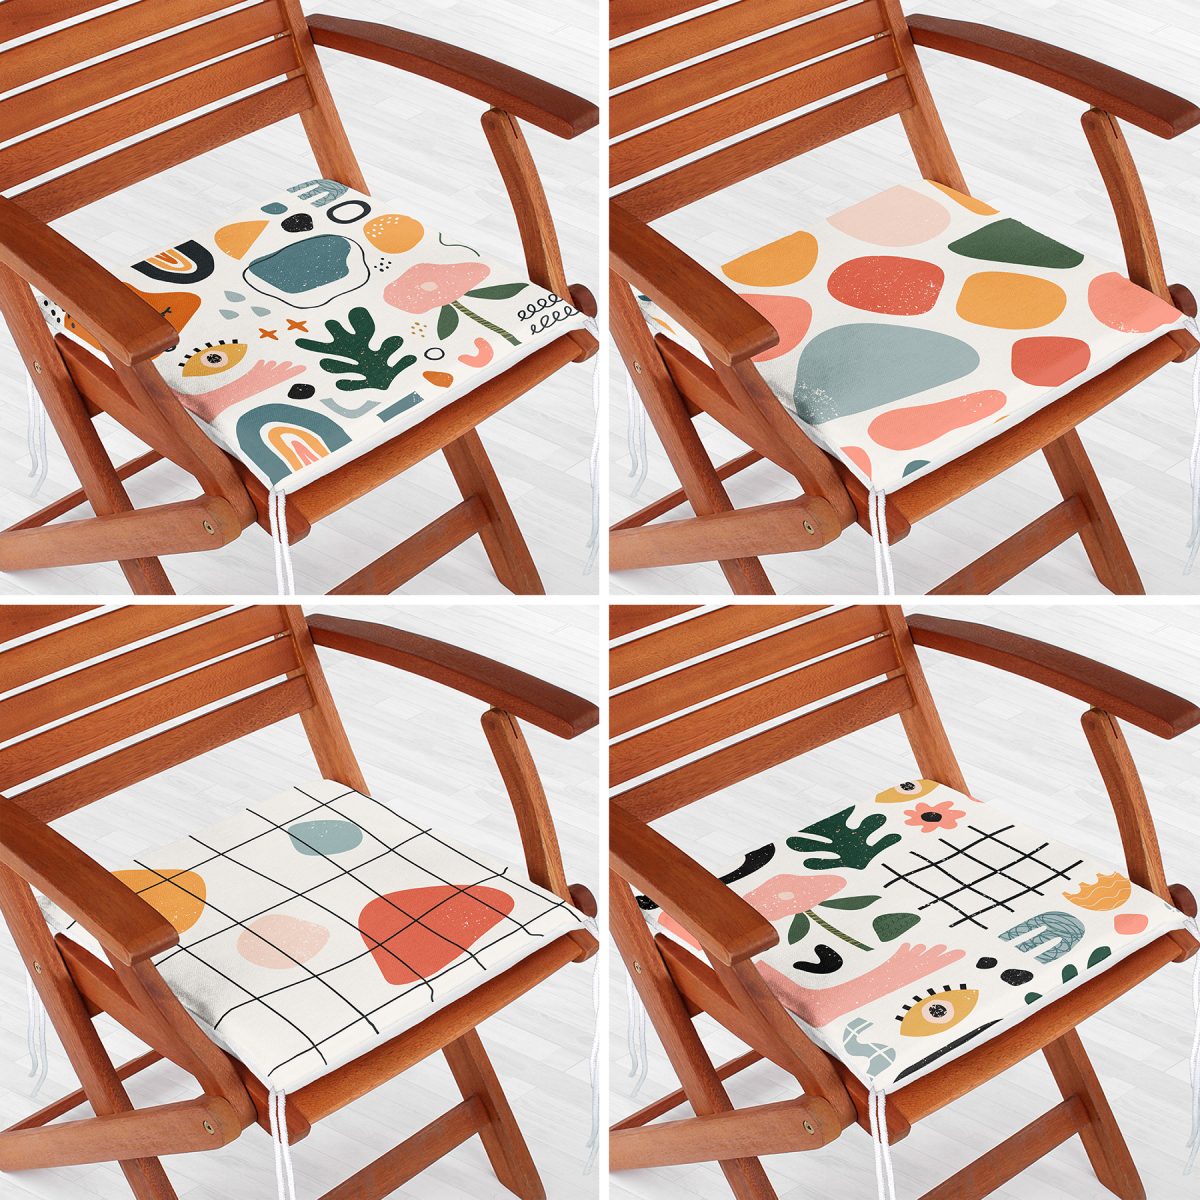 4'lü Minimal Renkli Özel Tasarımlı Fermuarlı Sandalye Minderi Seti Realhomes